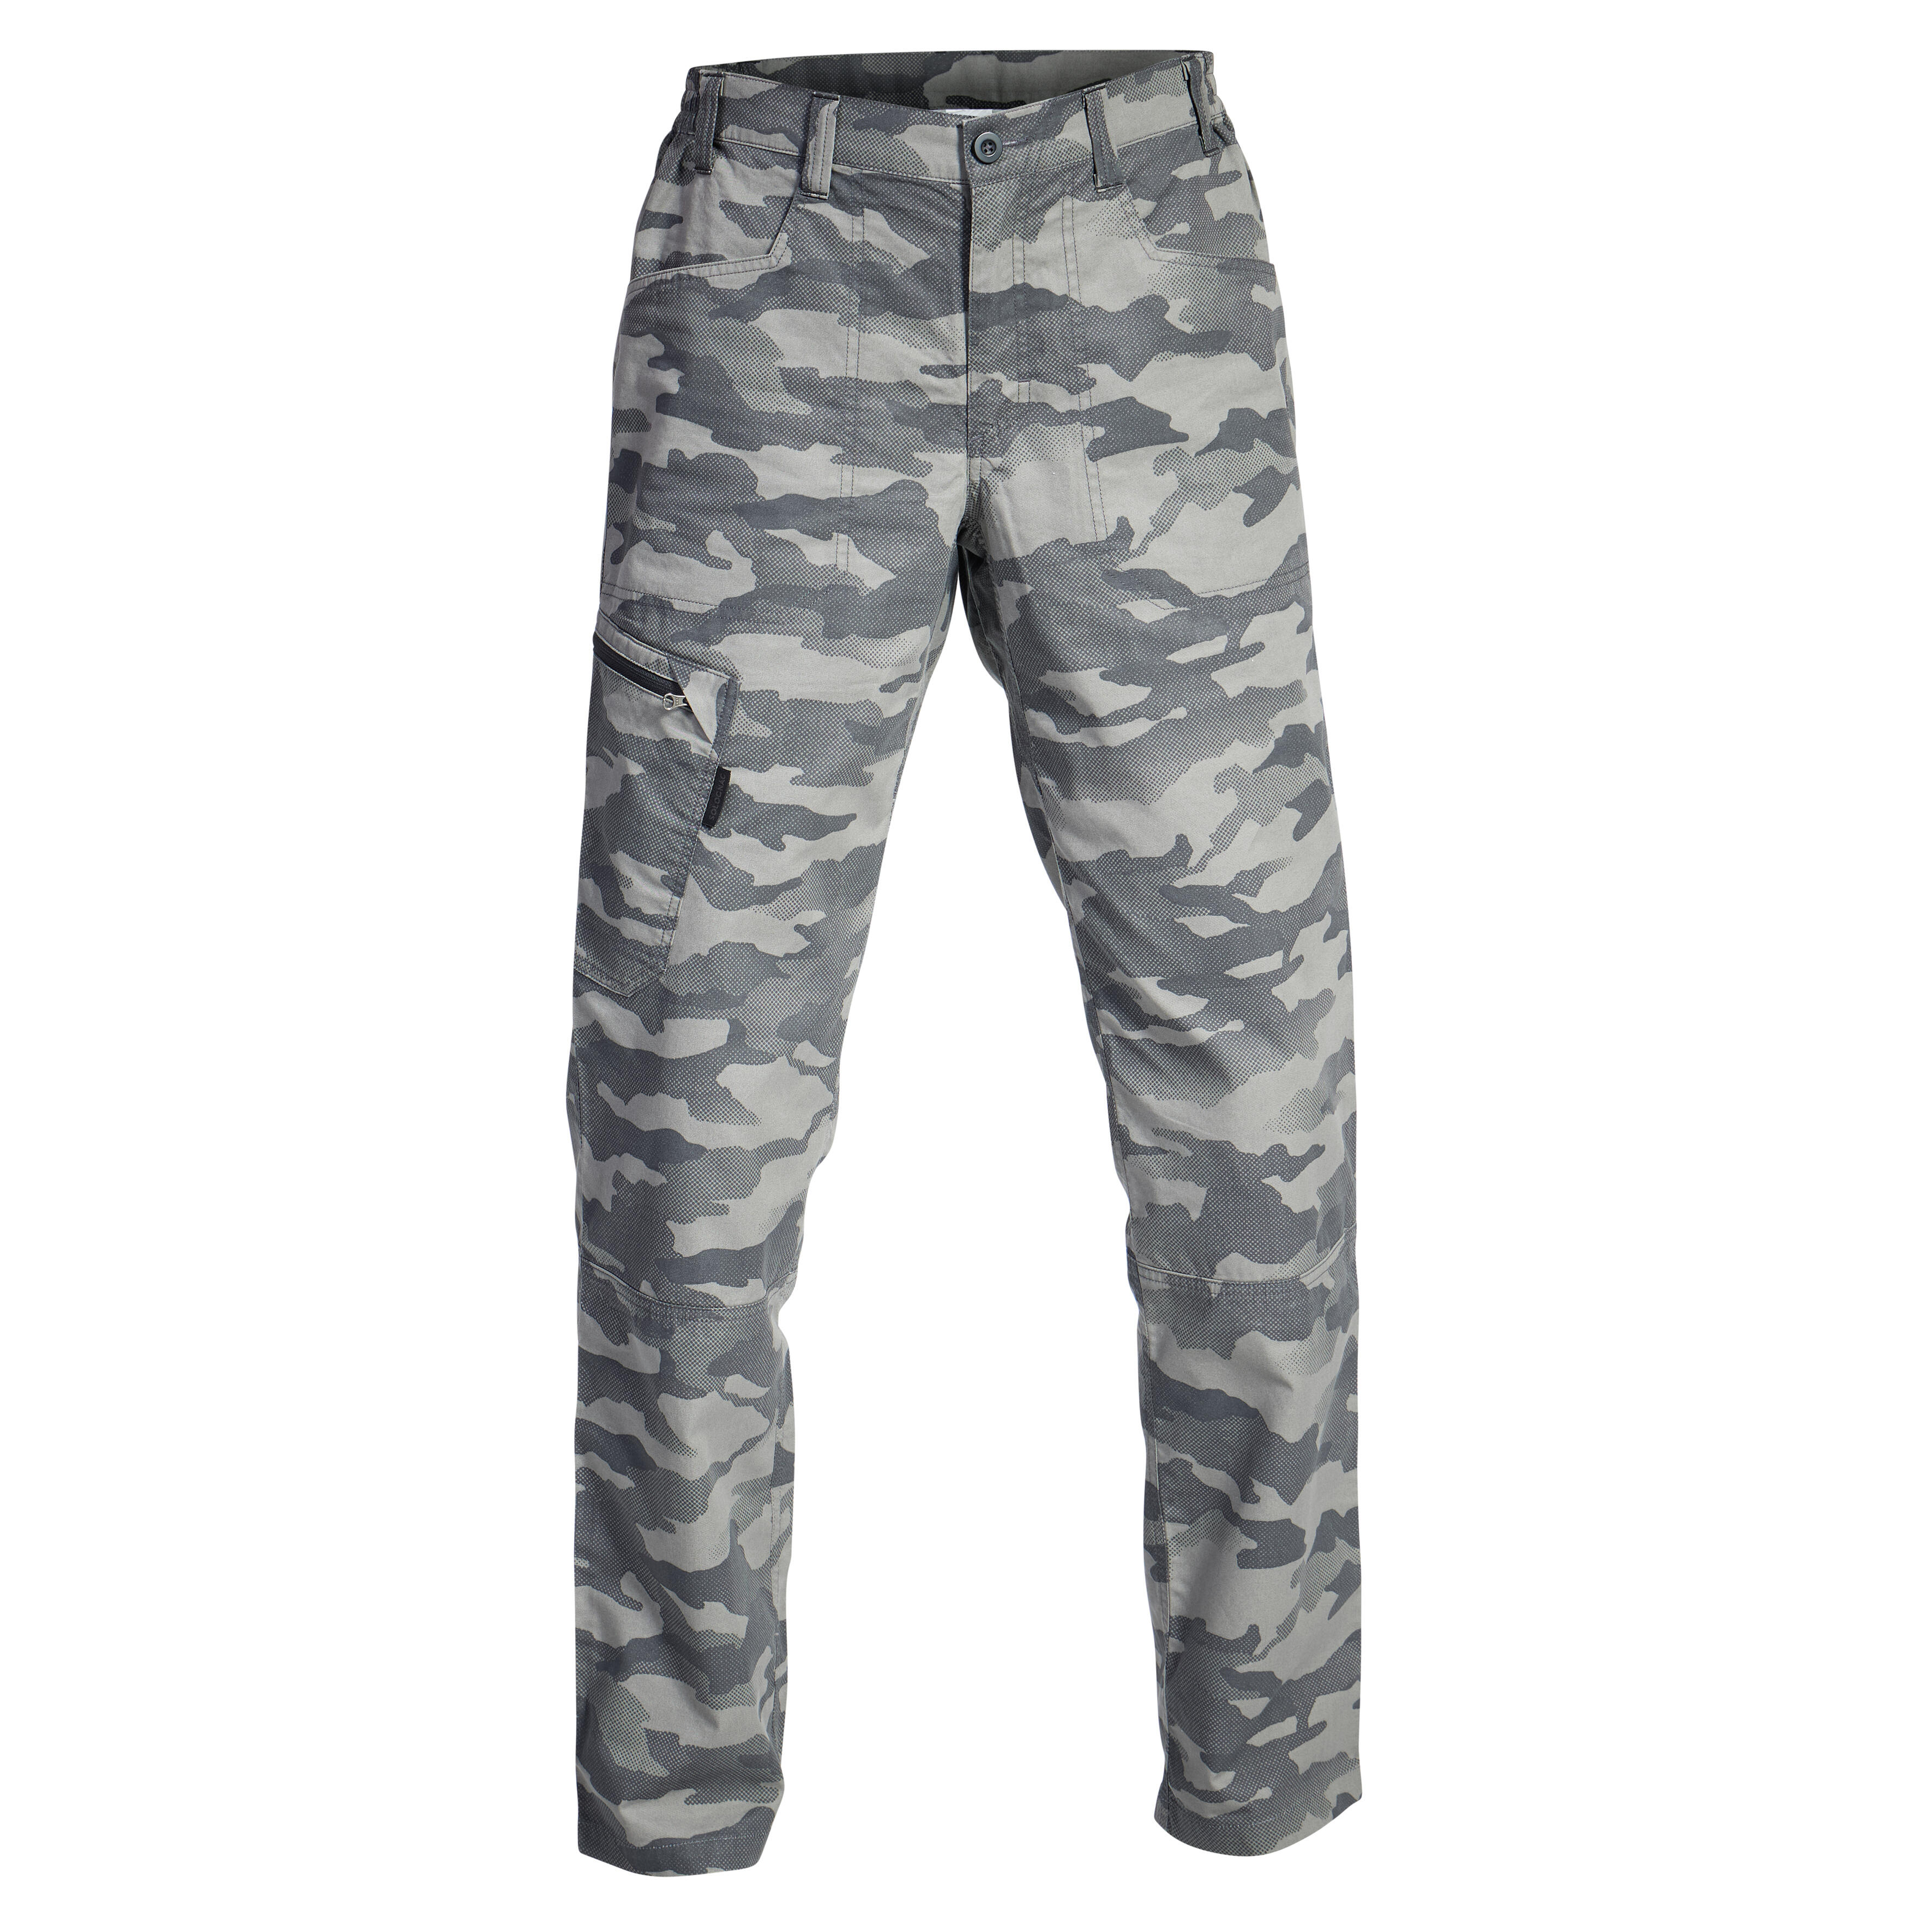 H World Shopping Men Tactical BDU Combat Uniform Jacket Shirt & Pants Suit  for Army Military Airsoft Paintball Hunting Shooting War Game Multicam MC  Medium